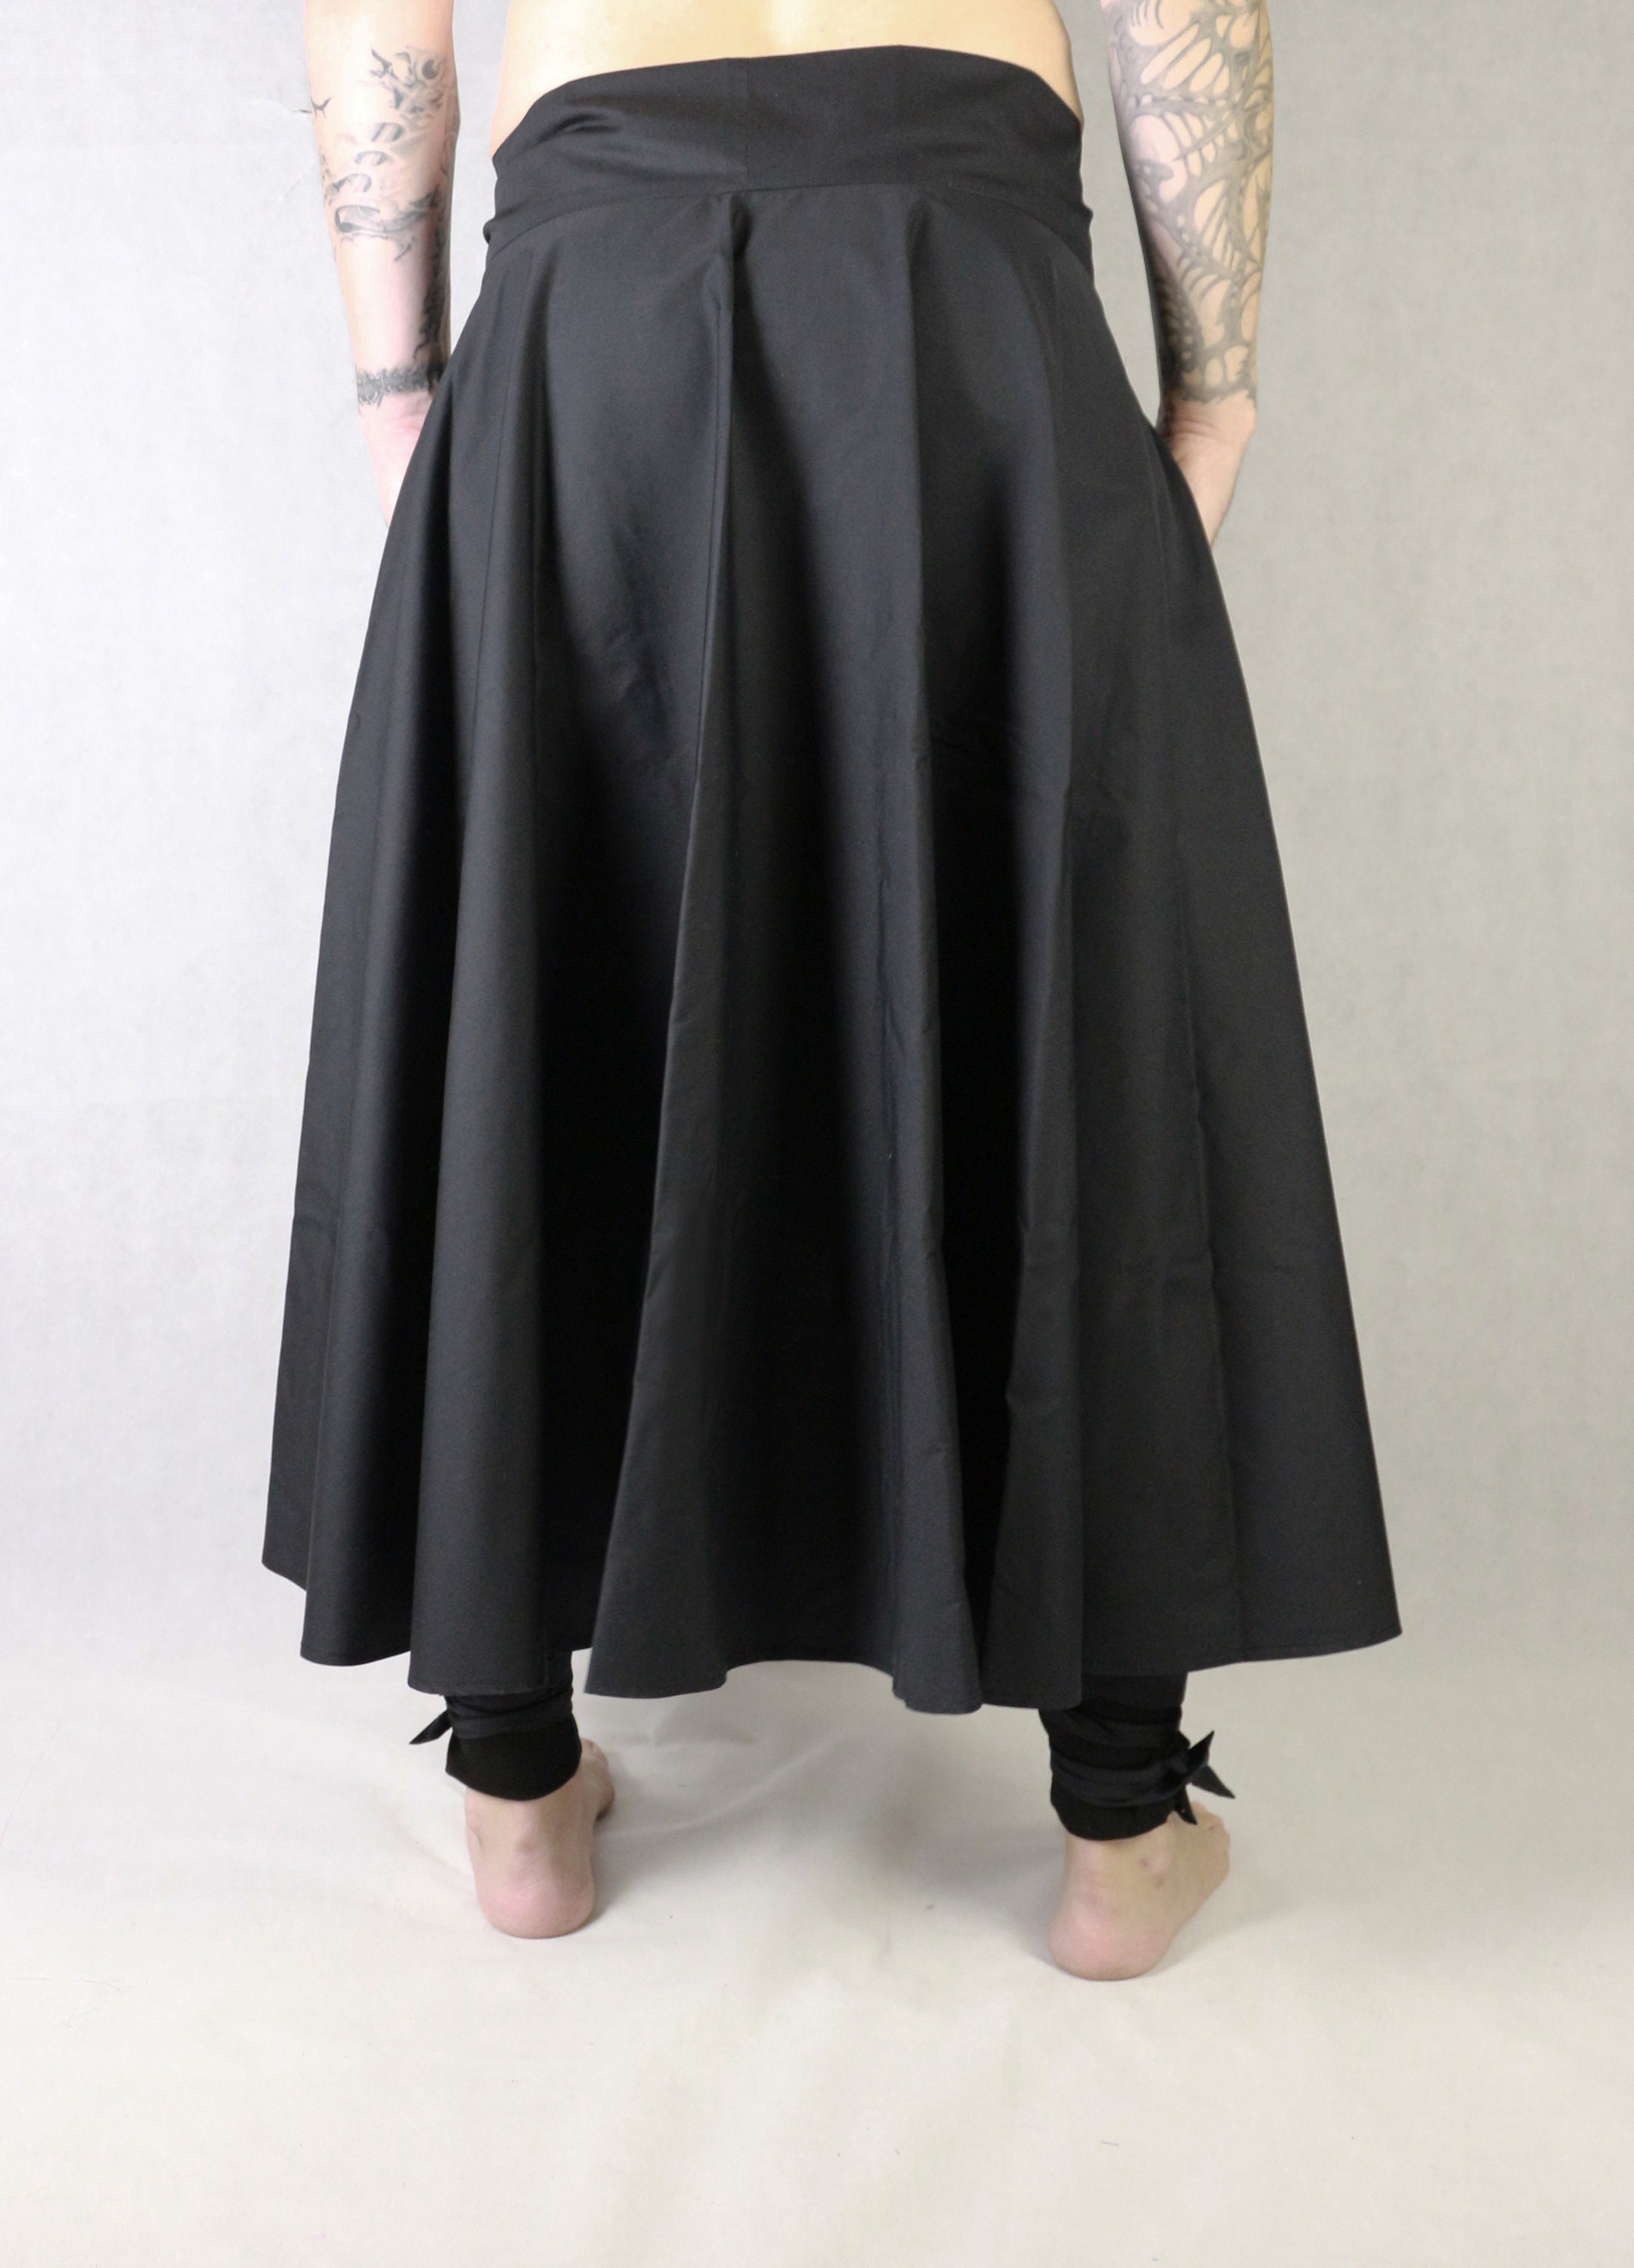 Hakama pants with removable skirt japanese style samurai | Etsy